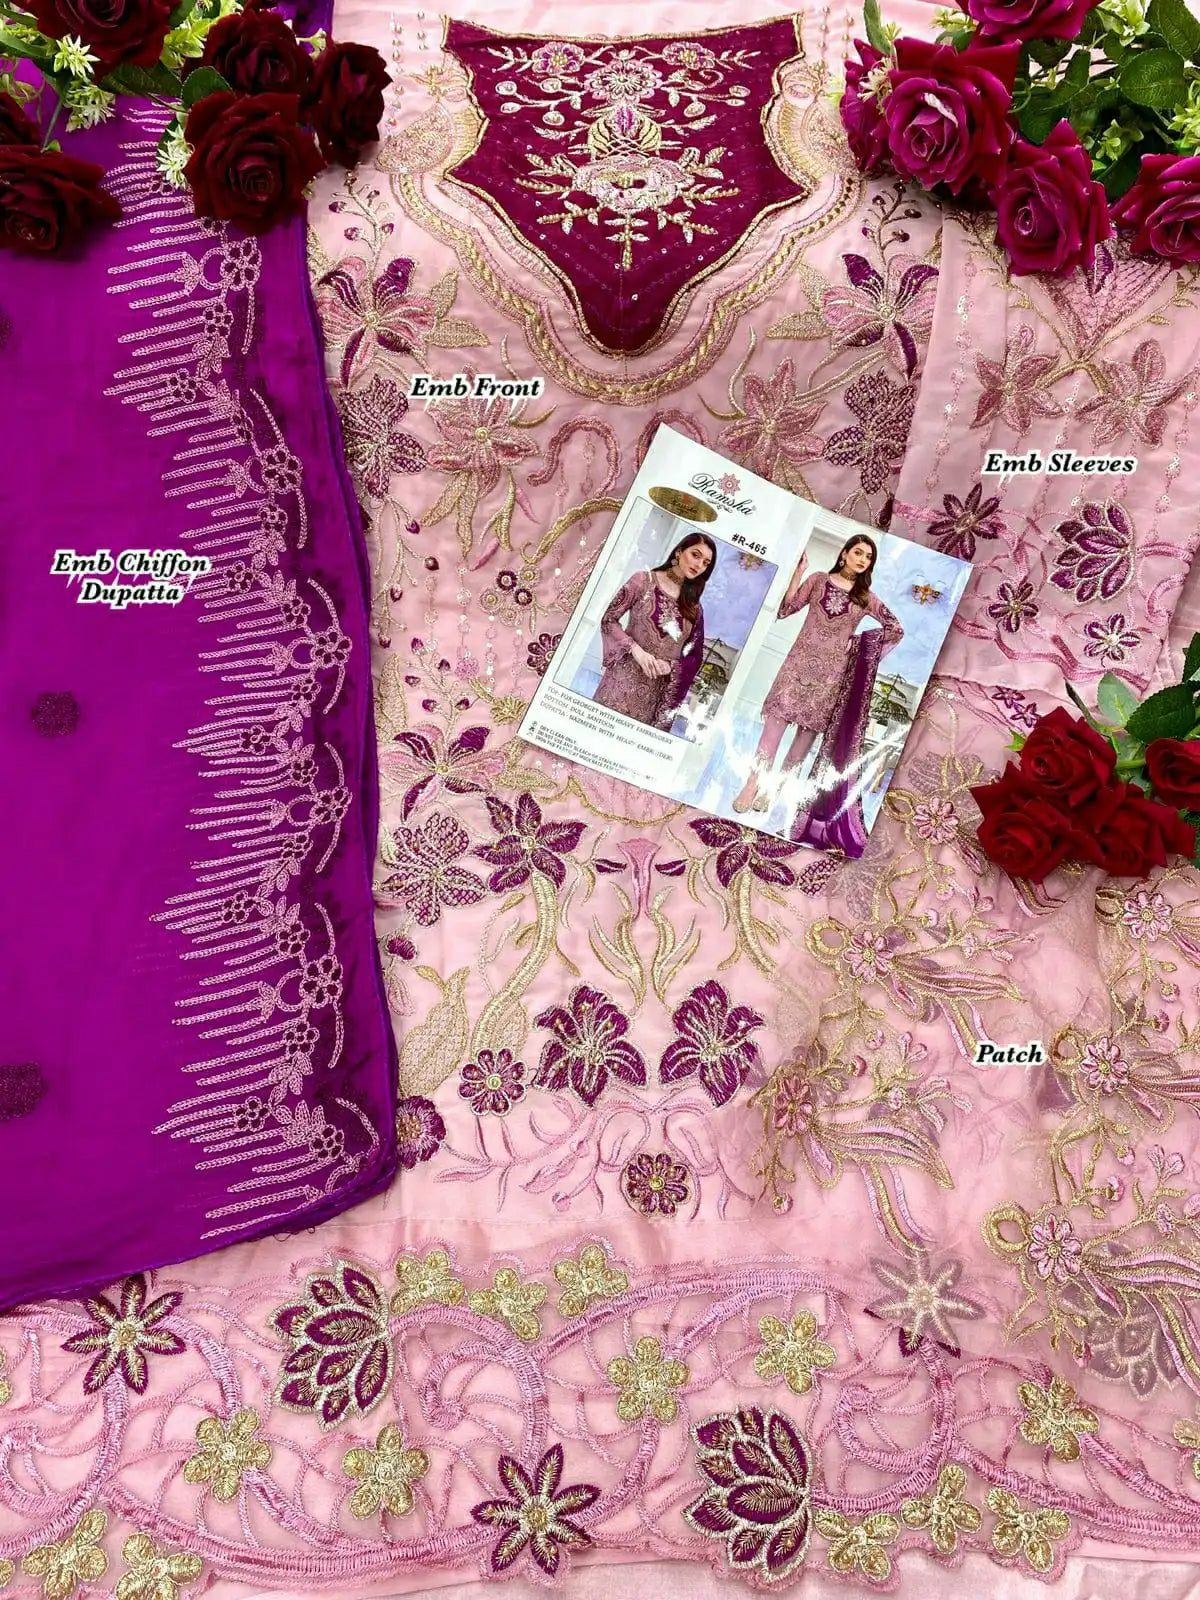 Magenta Georgette Pakistani Designer Salwar Suit